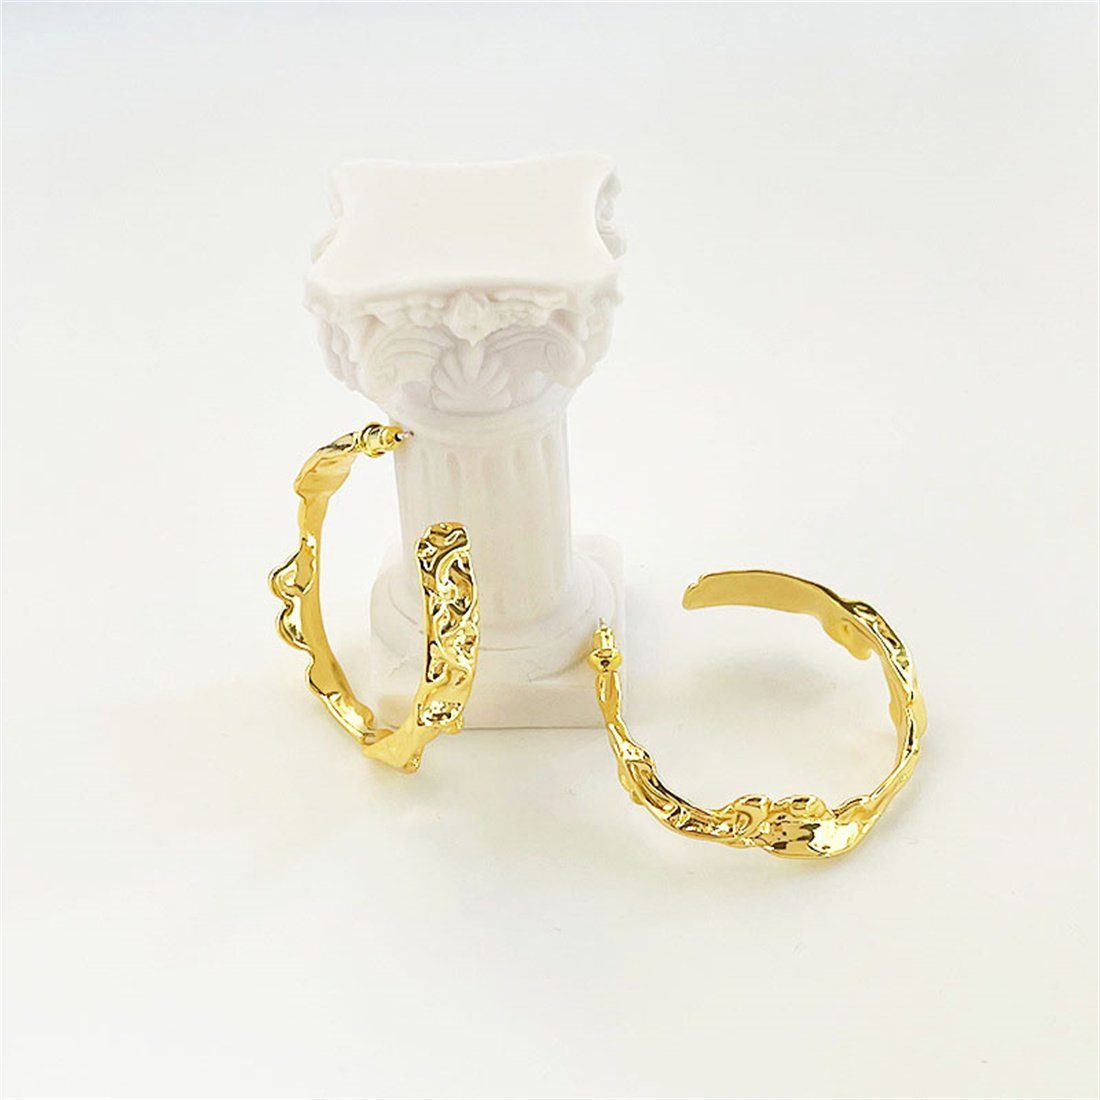 für Vintage-Ohrring-Set Gold unregelmäßige aus Metall, Frauen DÖRÖY Ohrstecker Paar Ohrringe